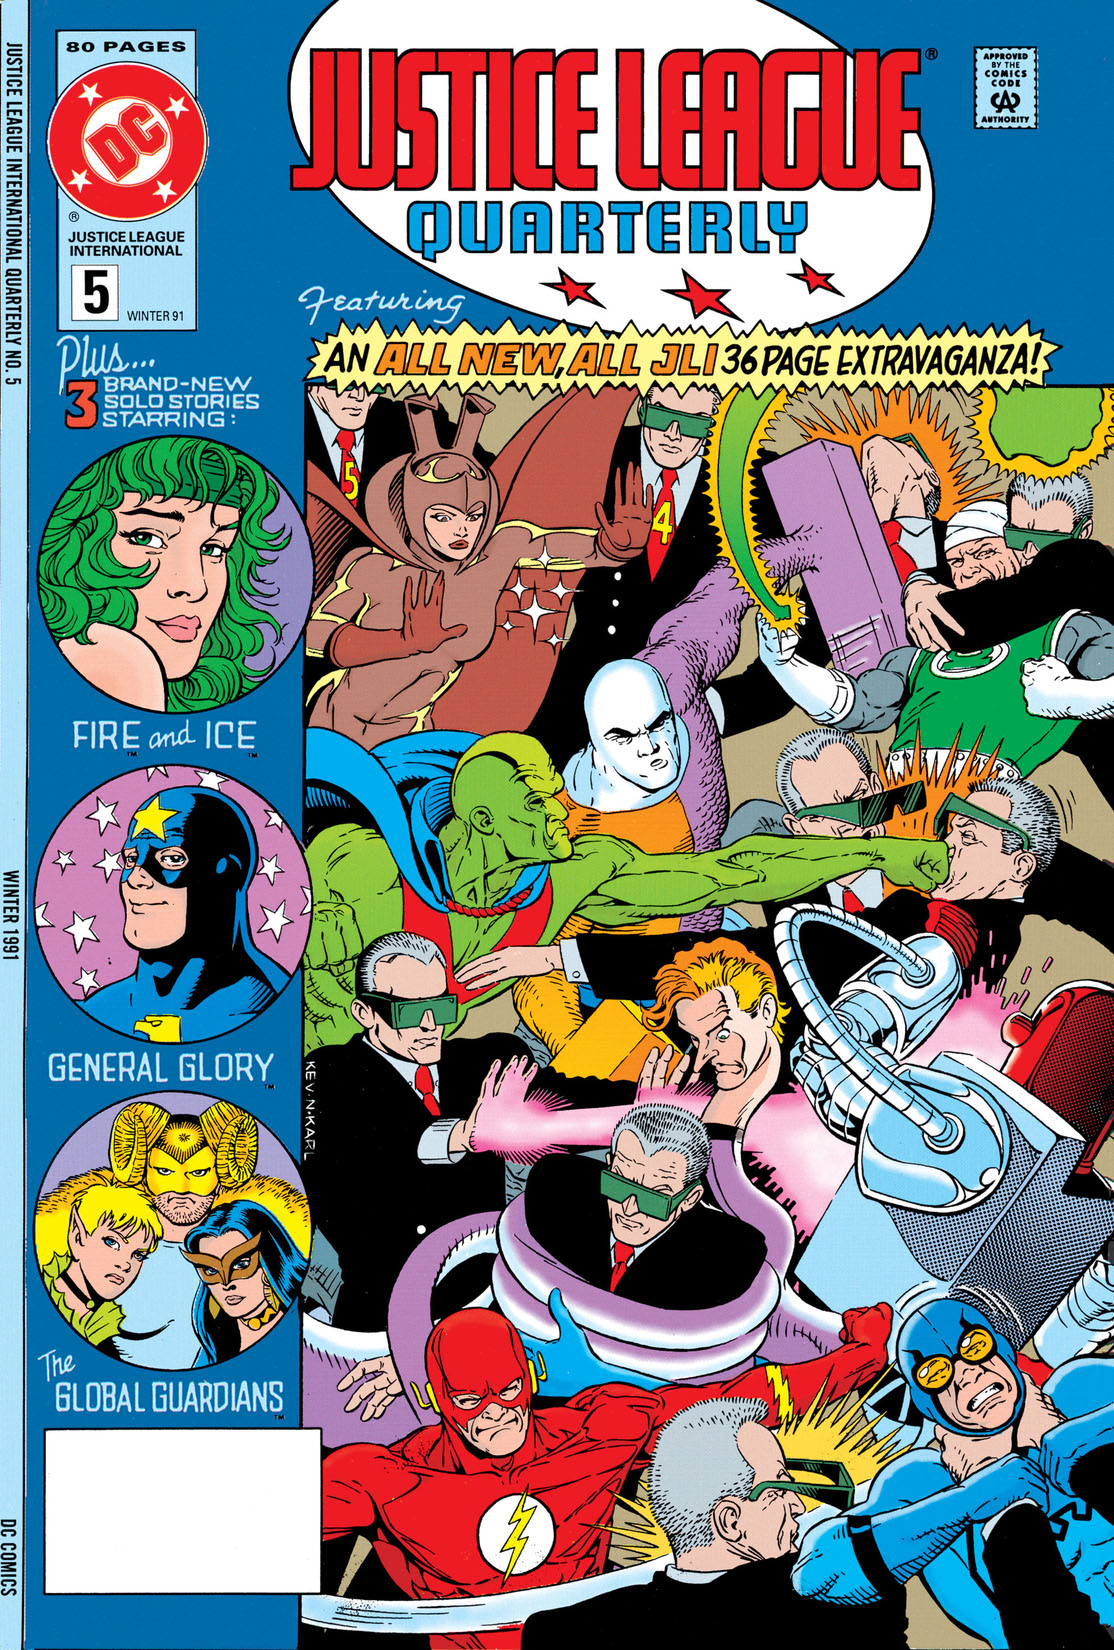 Justice League Quarterly #5 preview images